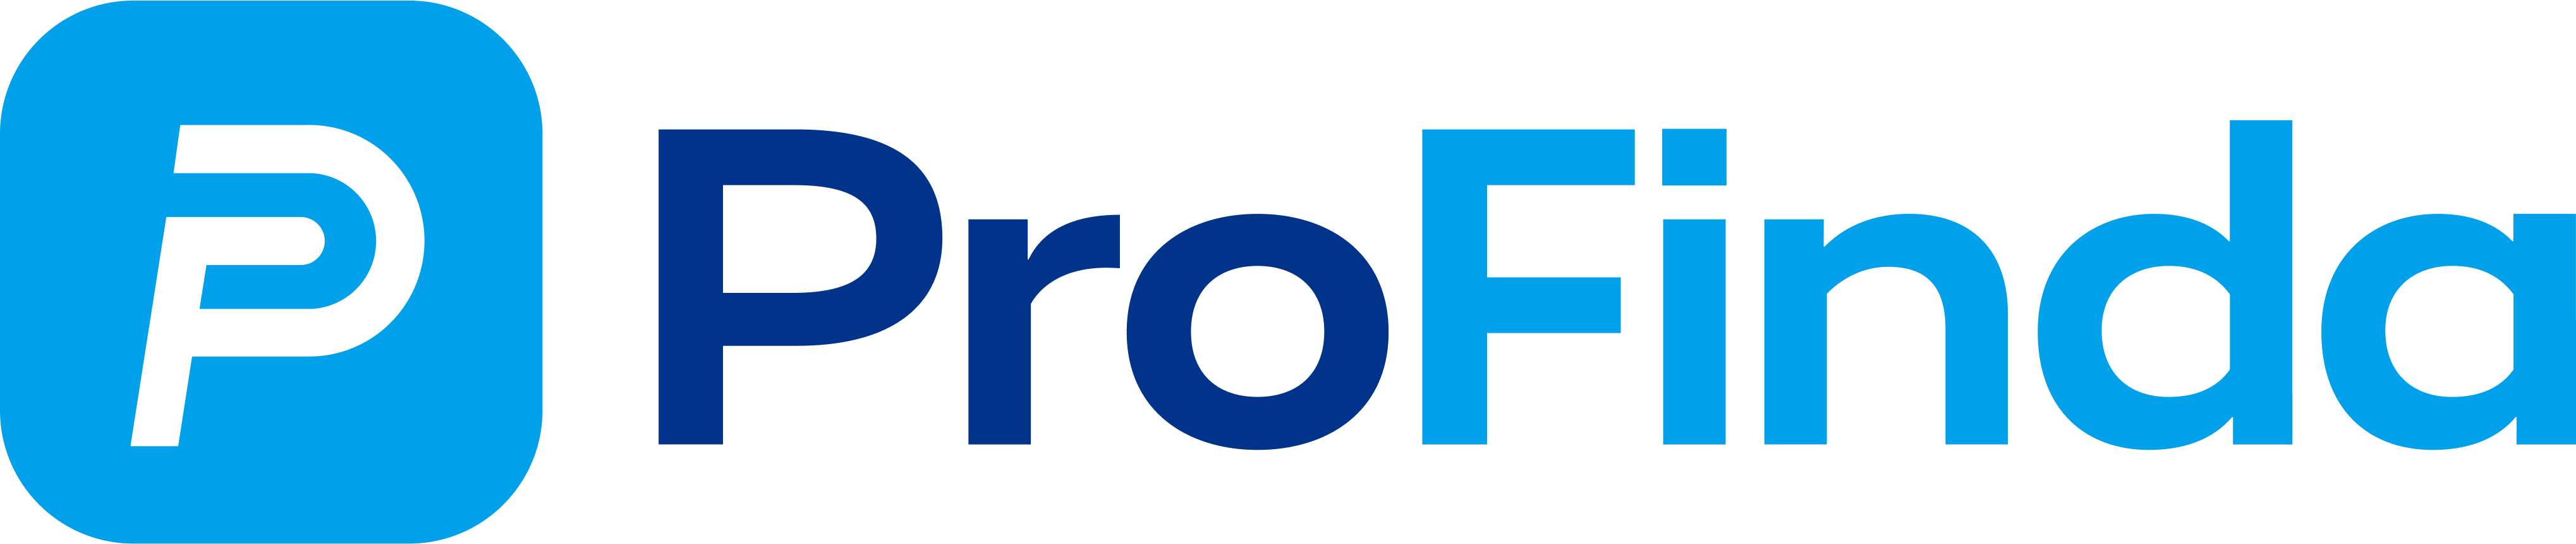 PF-logo-colour-1